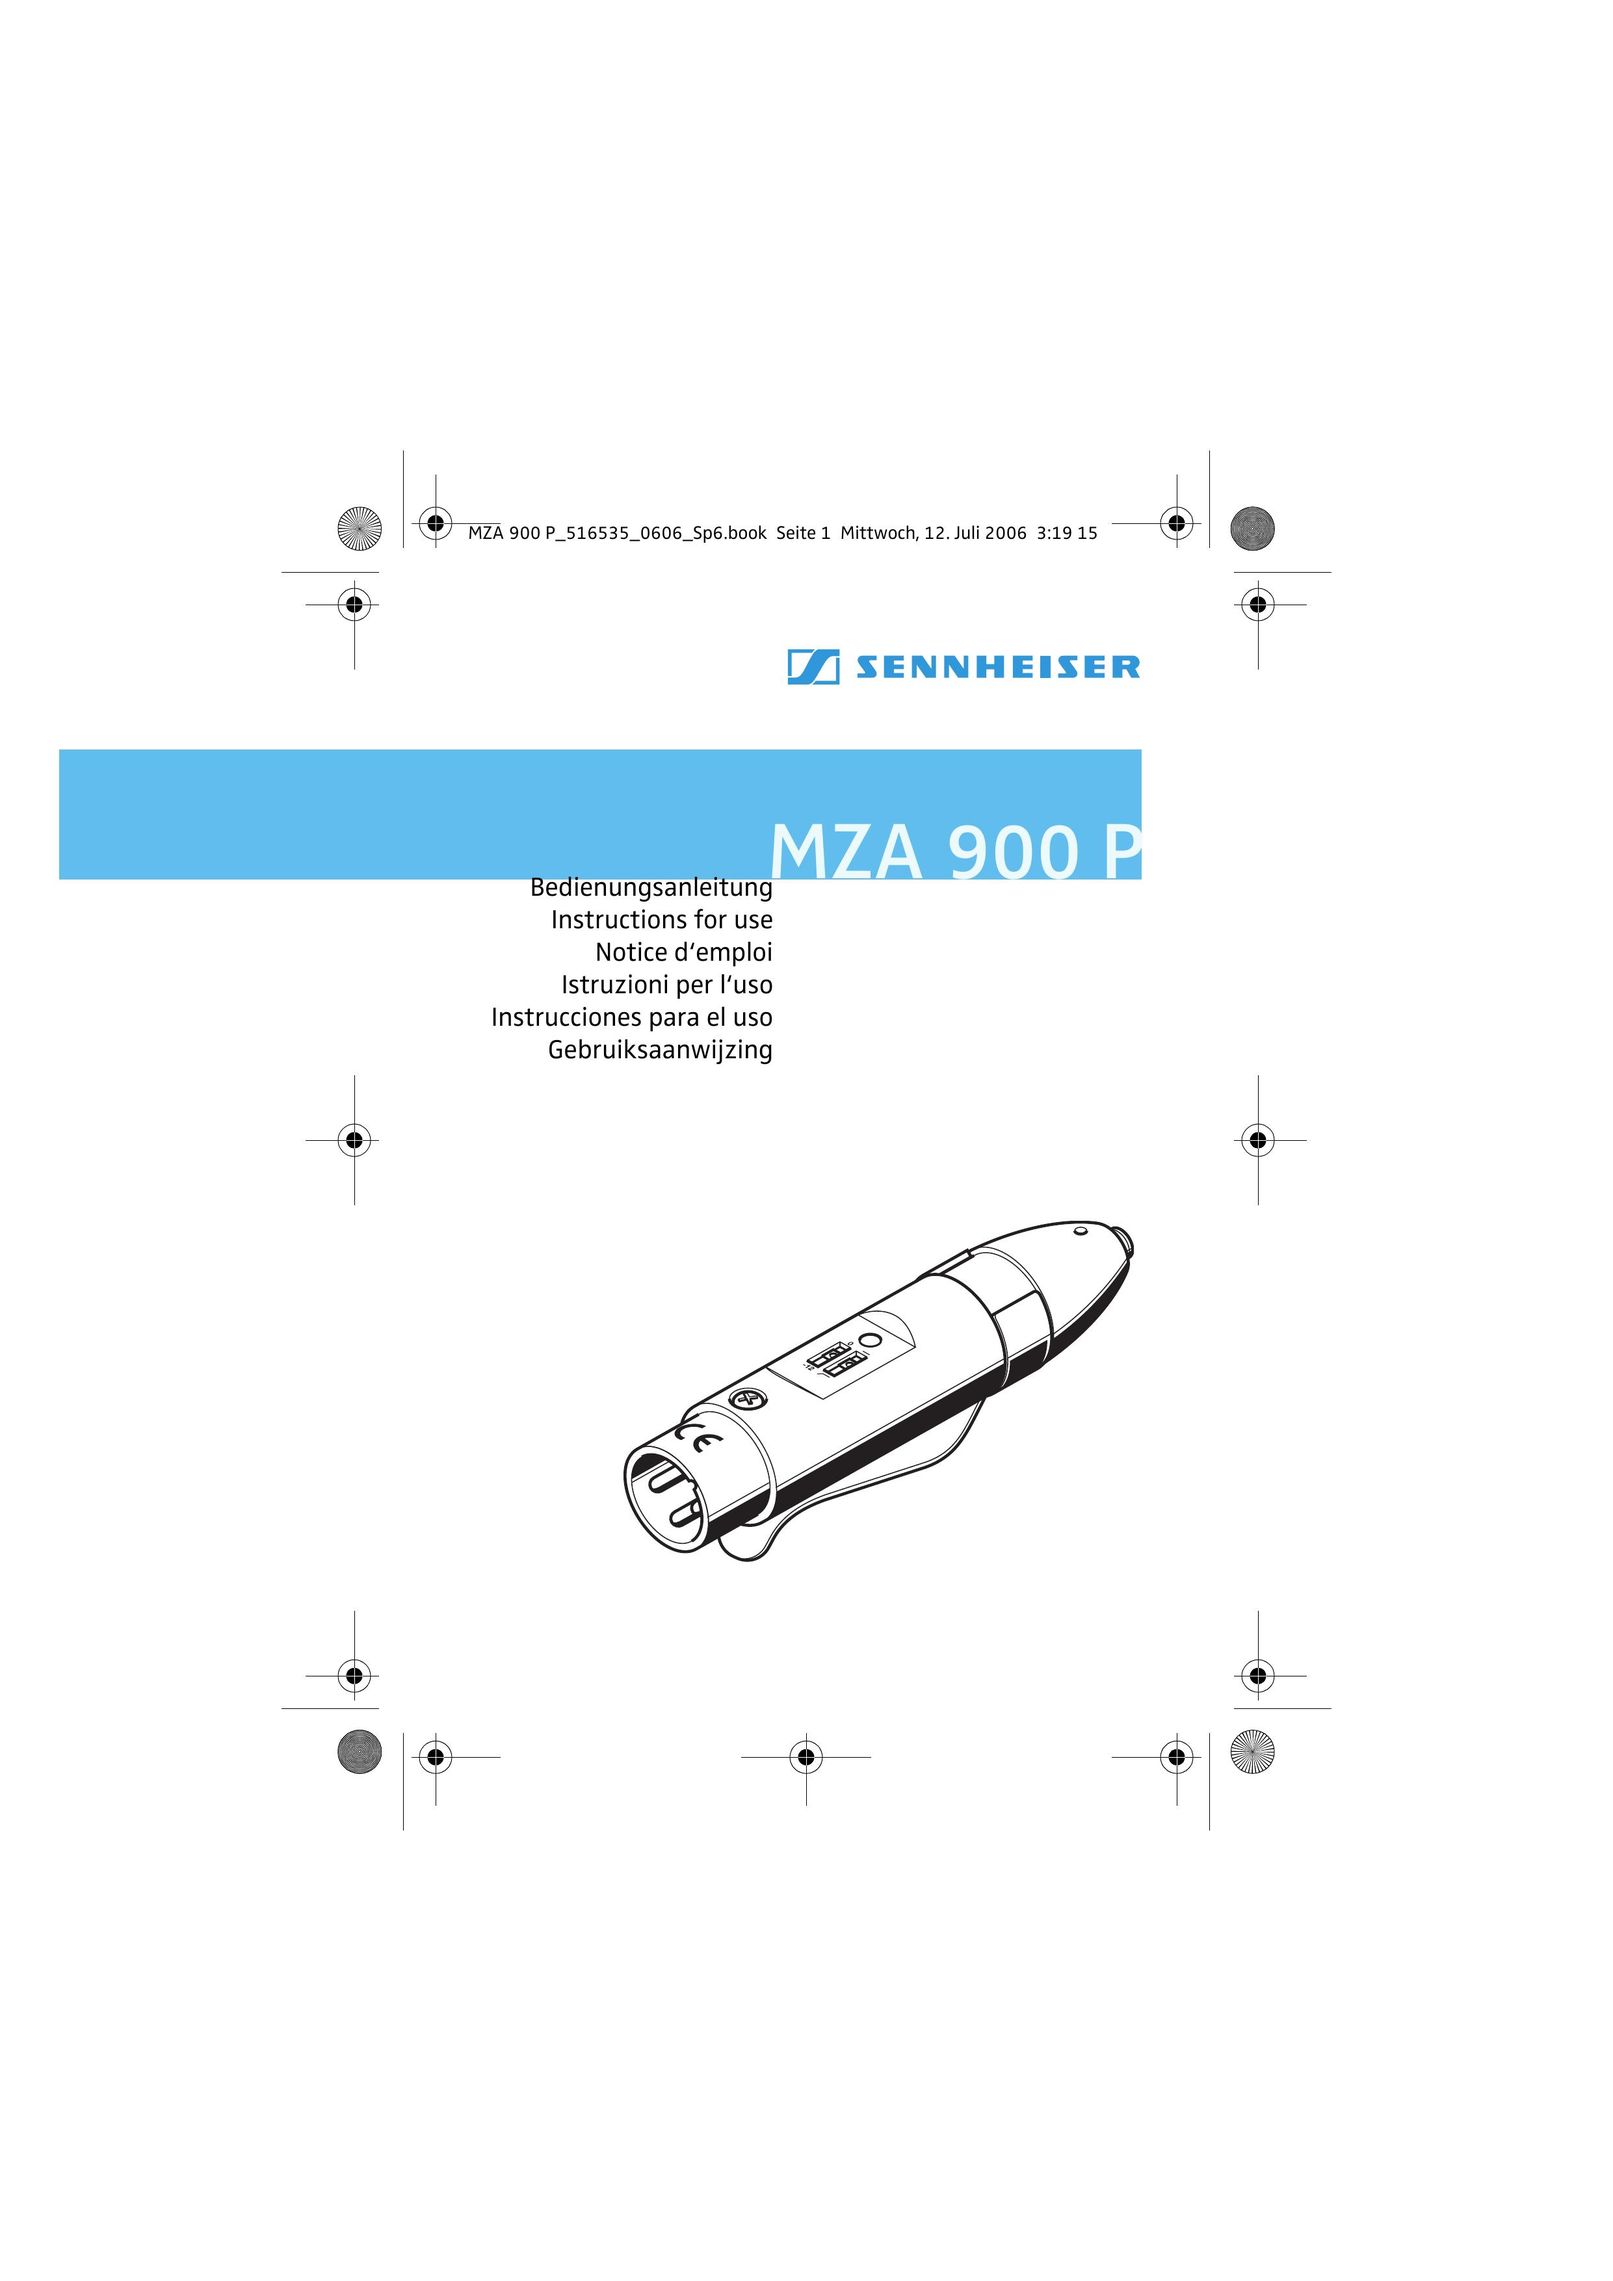 Sennheiser MZA 900 P Network Card User Manual